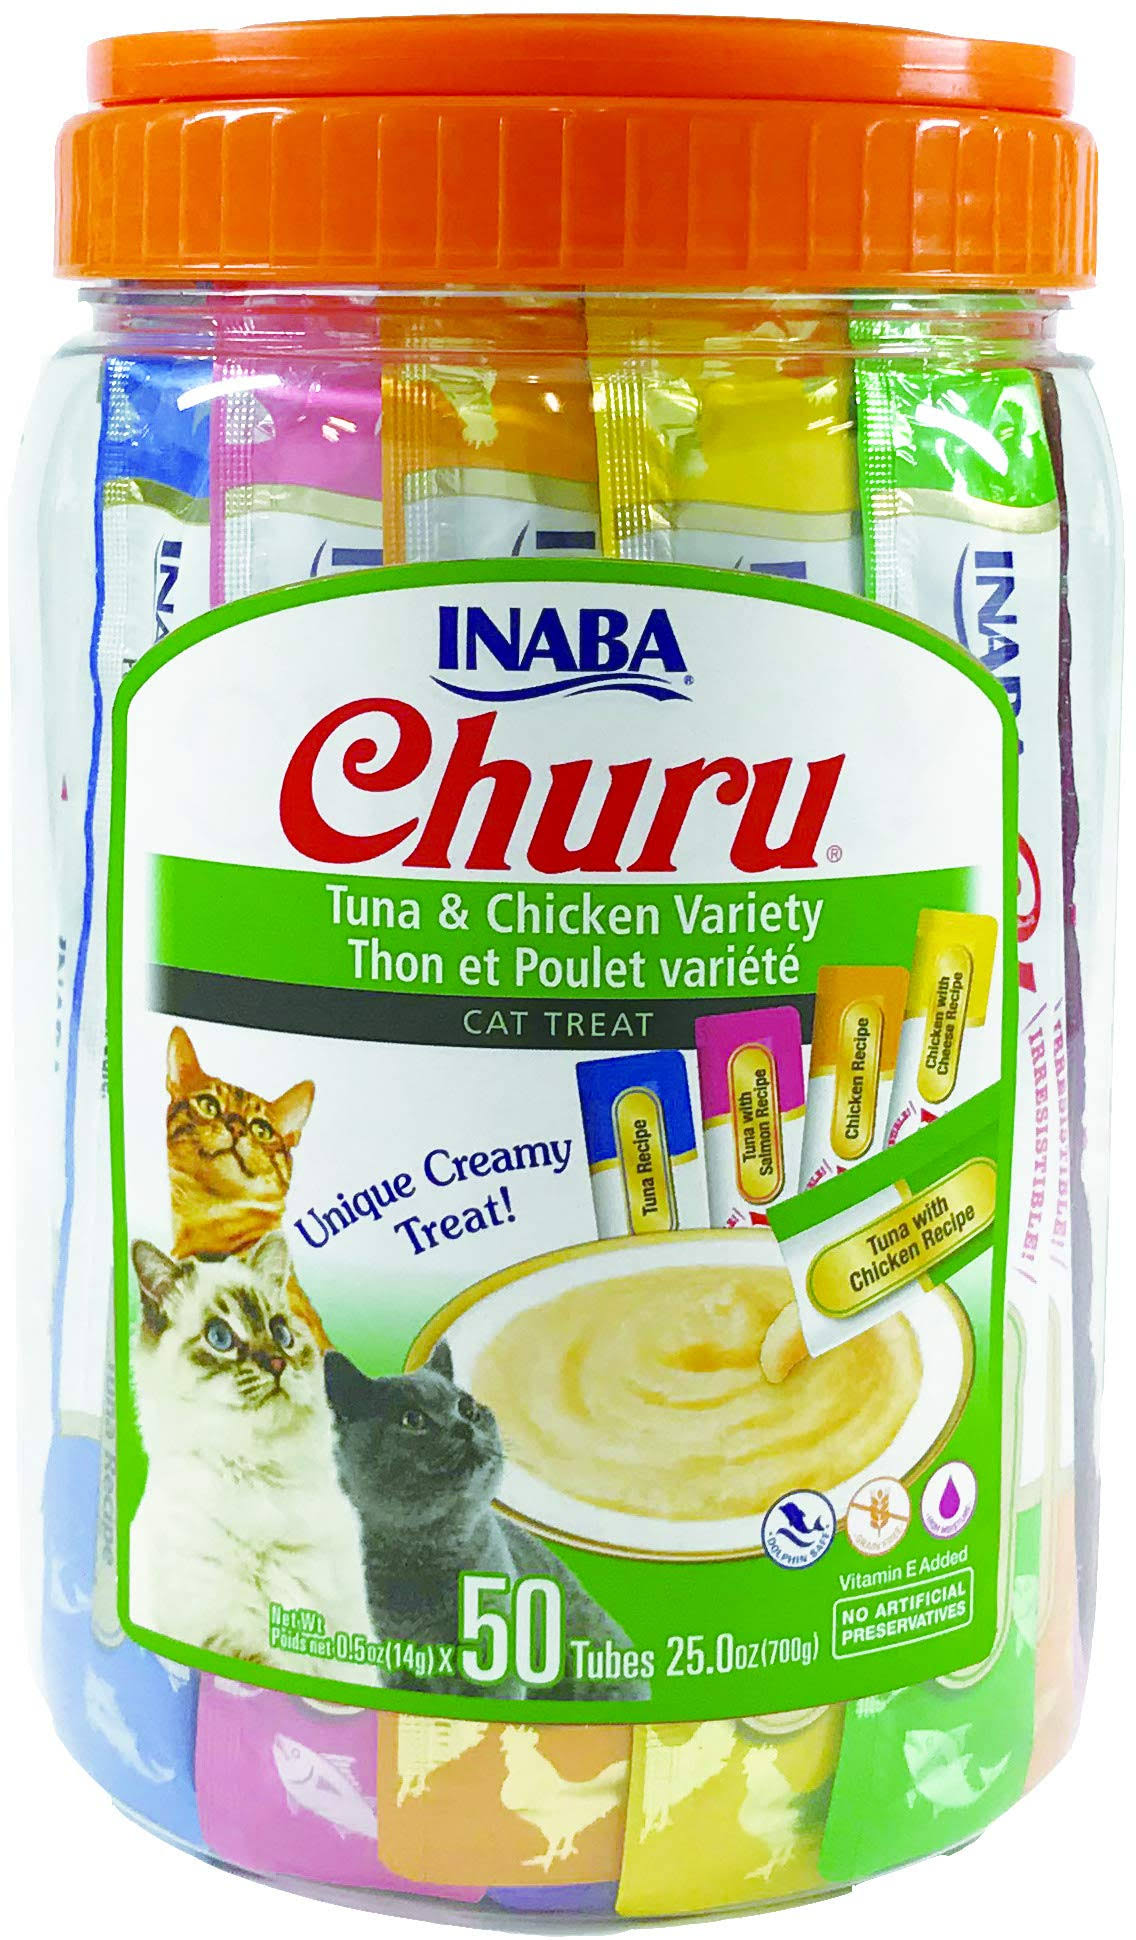 Inaba Churu Puree Tuna & Chicken Varieties Cat Treats 50 Tubes